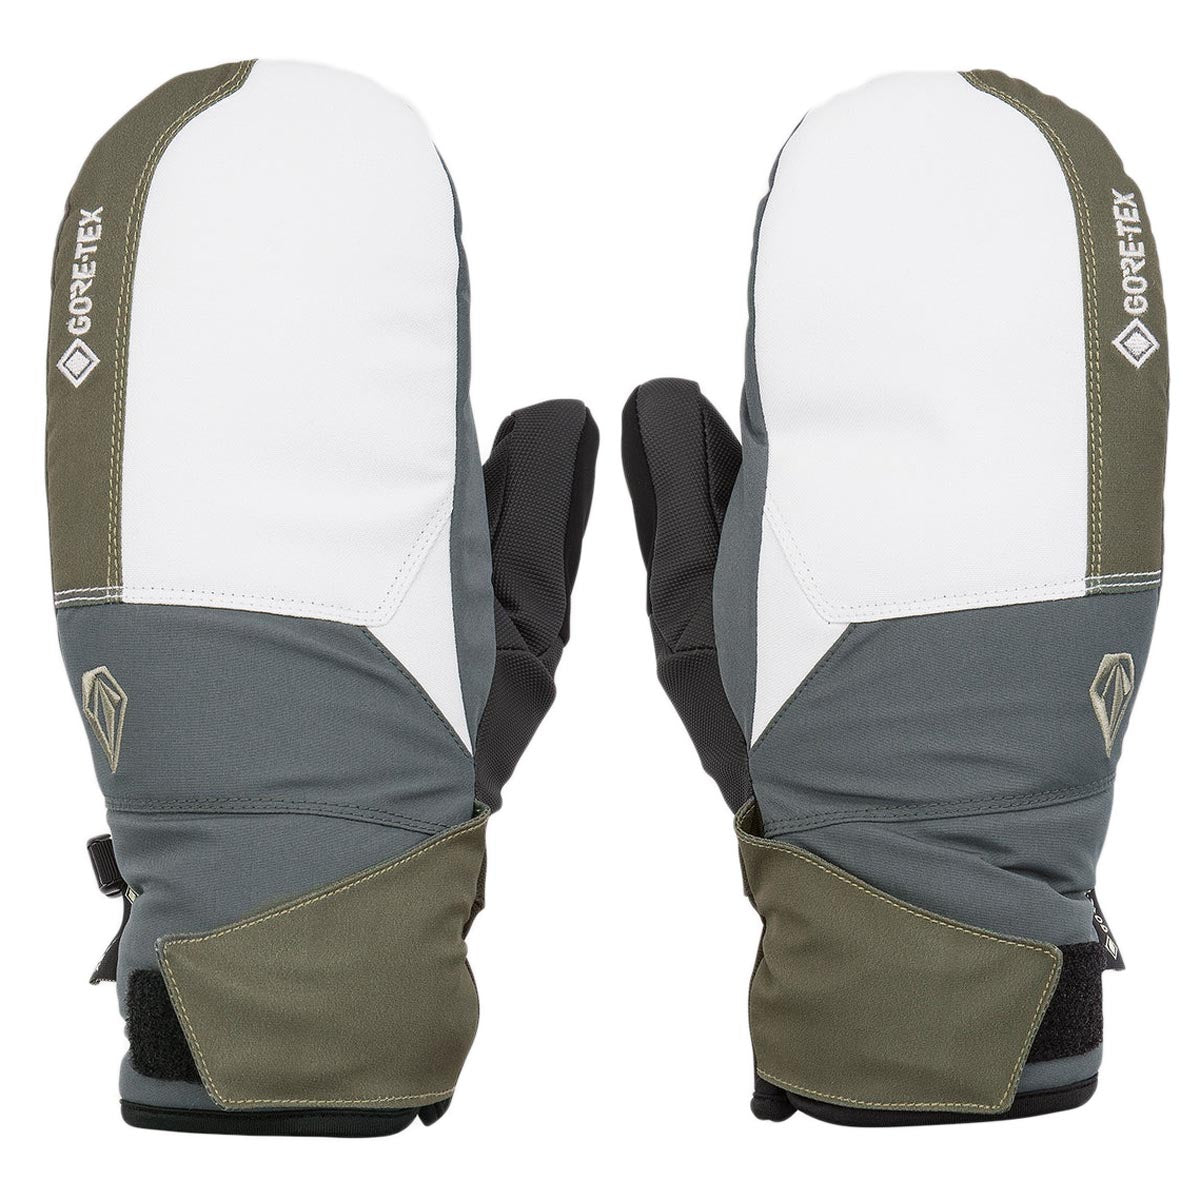 Volcom Stay Dry Gore-tex Mitt Snowboard Gloves - Light Military image 1